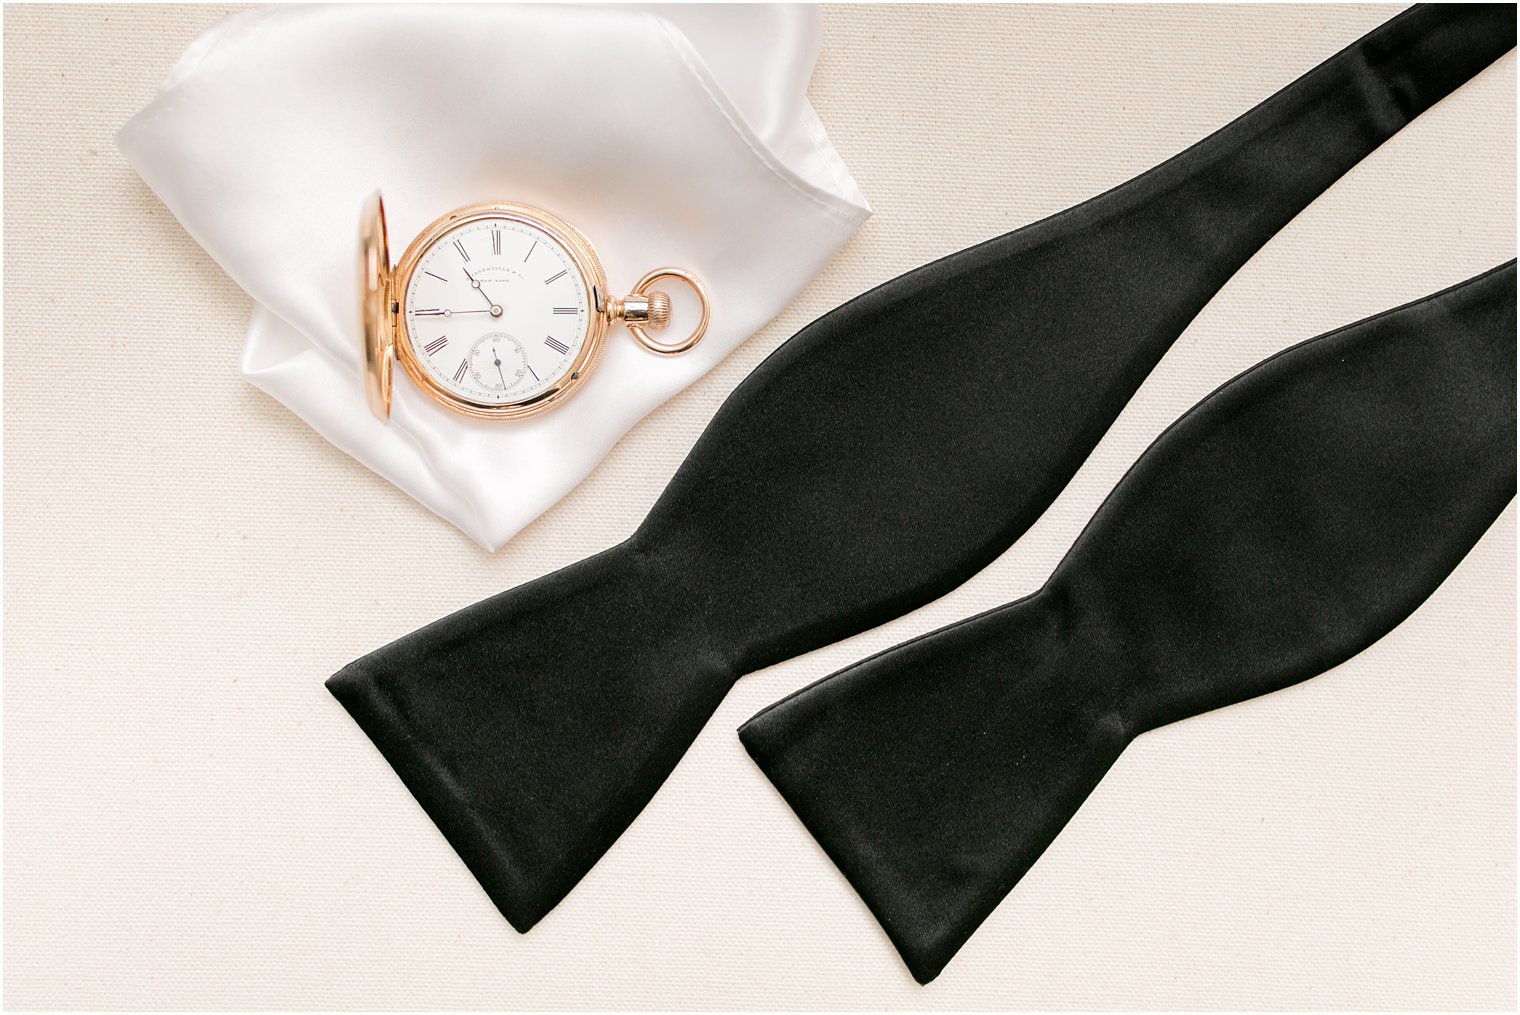 Groom's details for black tie wedding including gold pocket watch